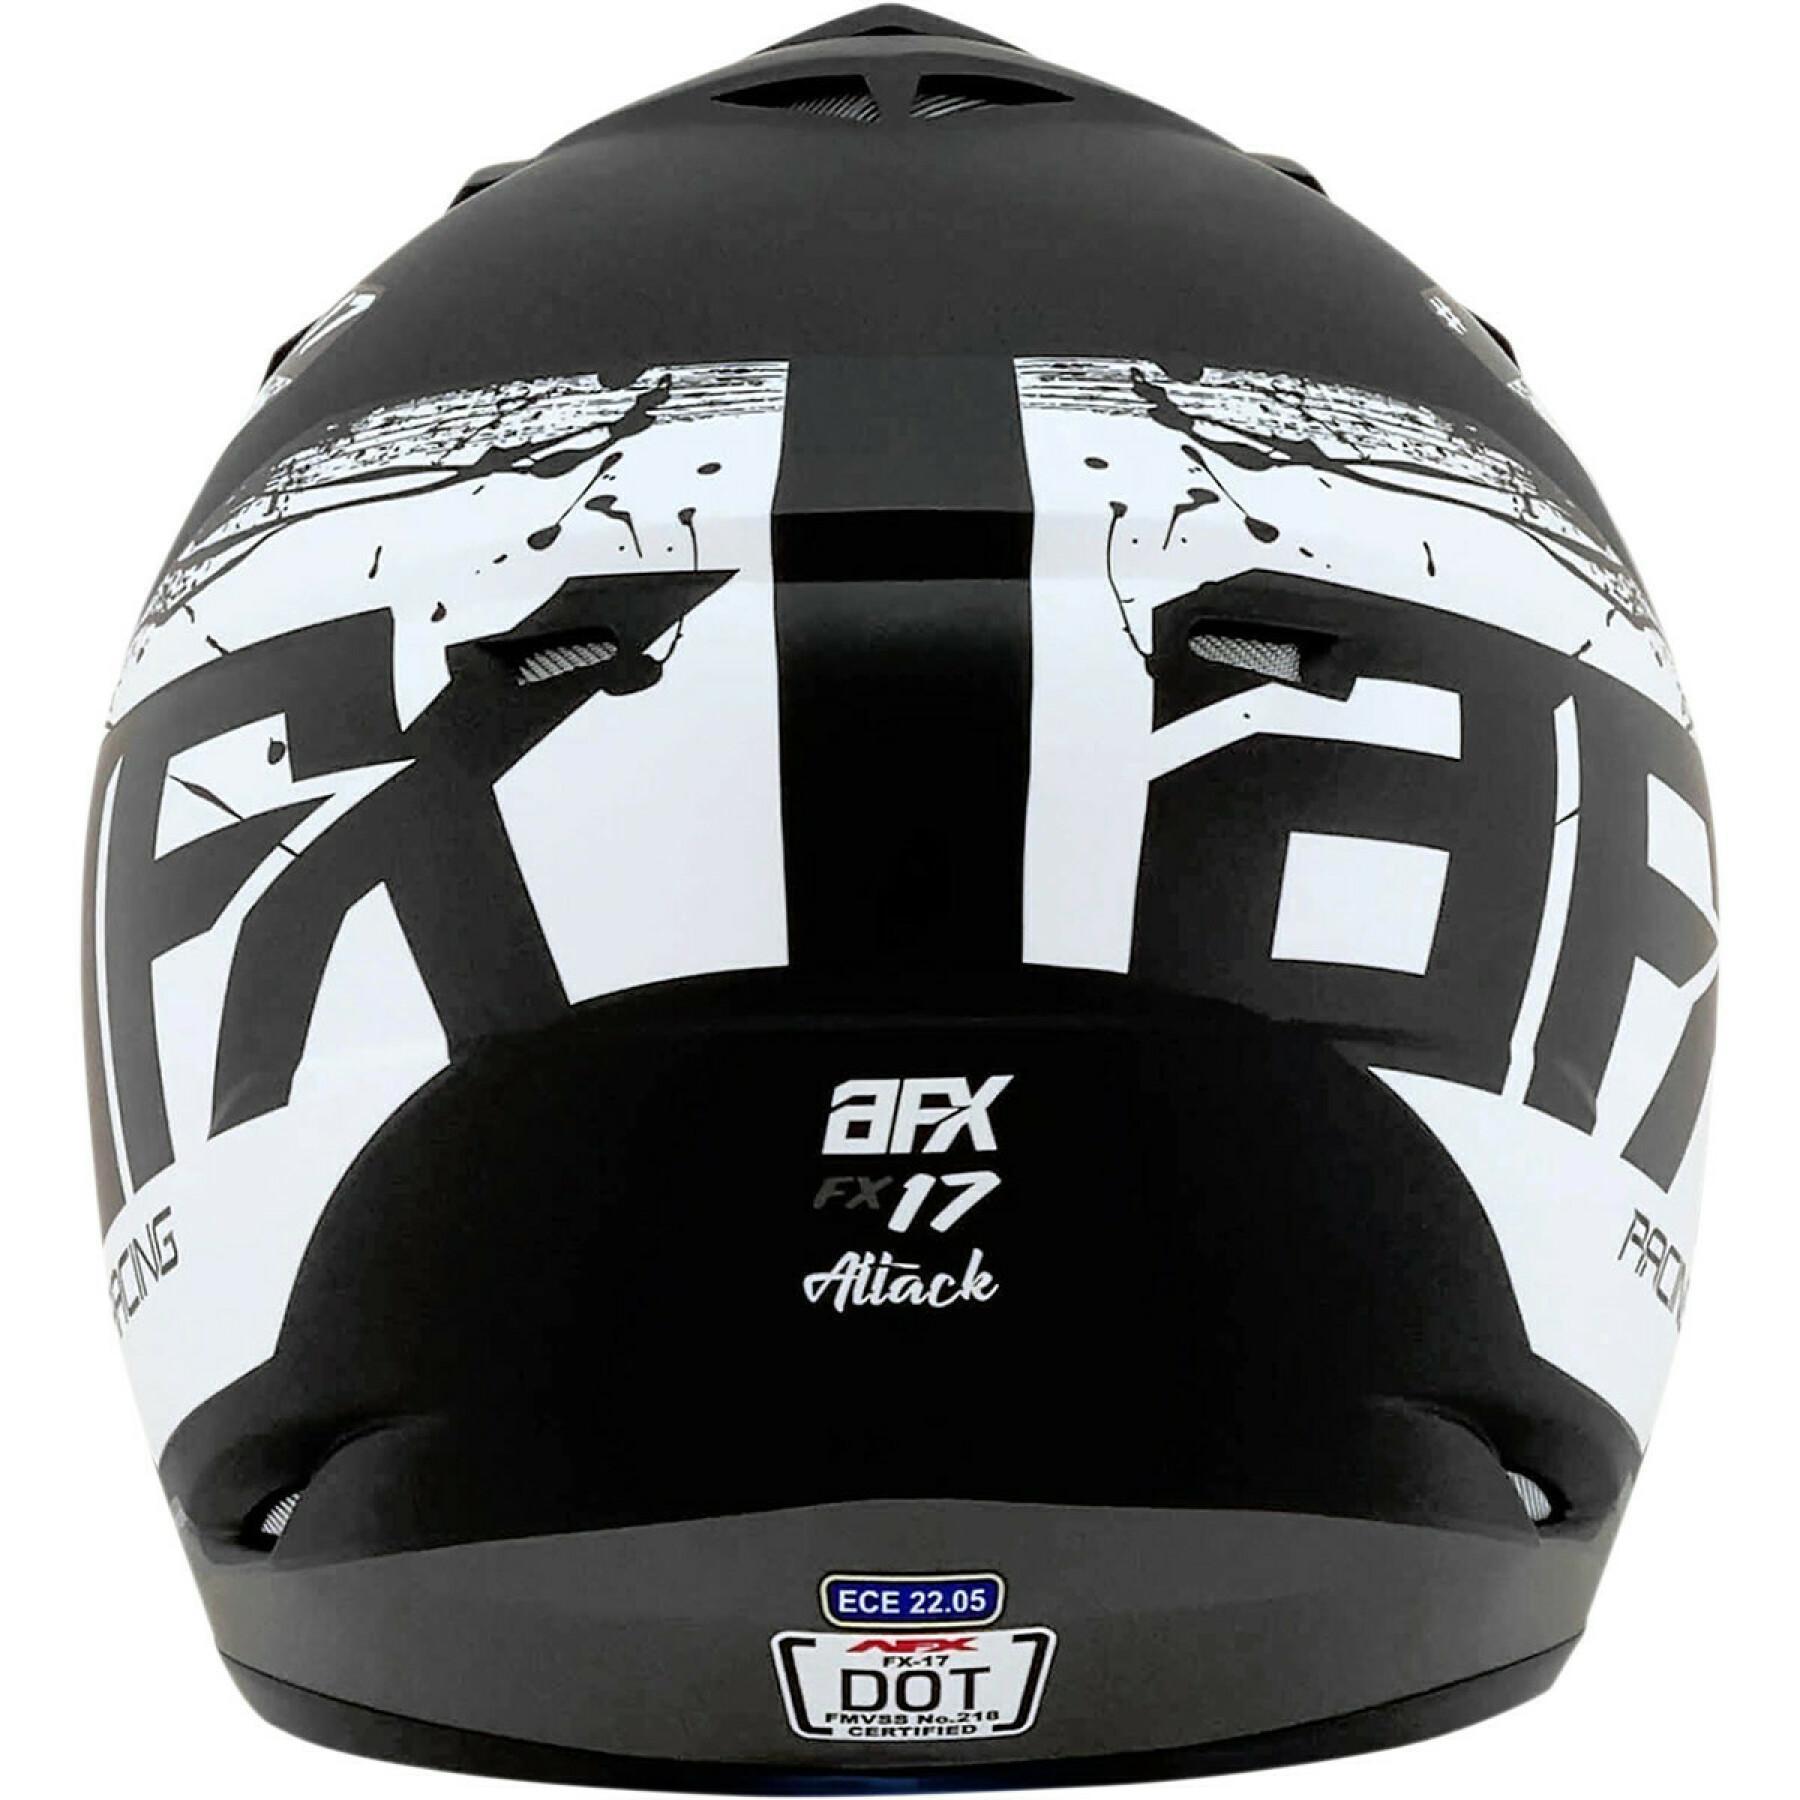 Motocrosshjälm AFX fx17 atk